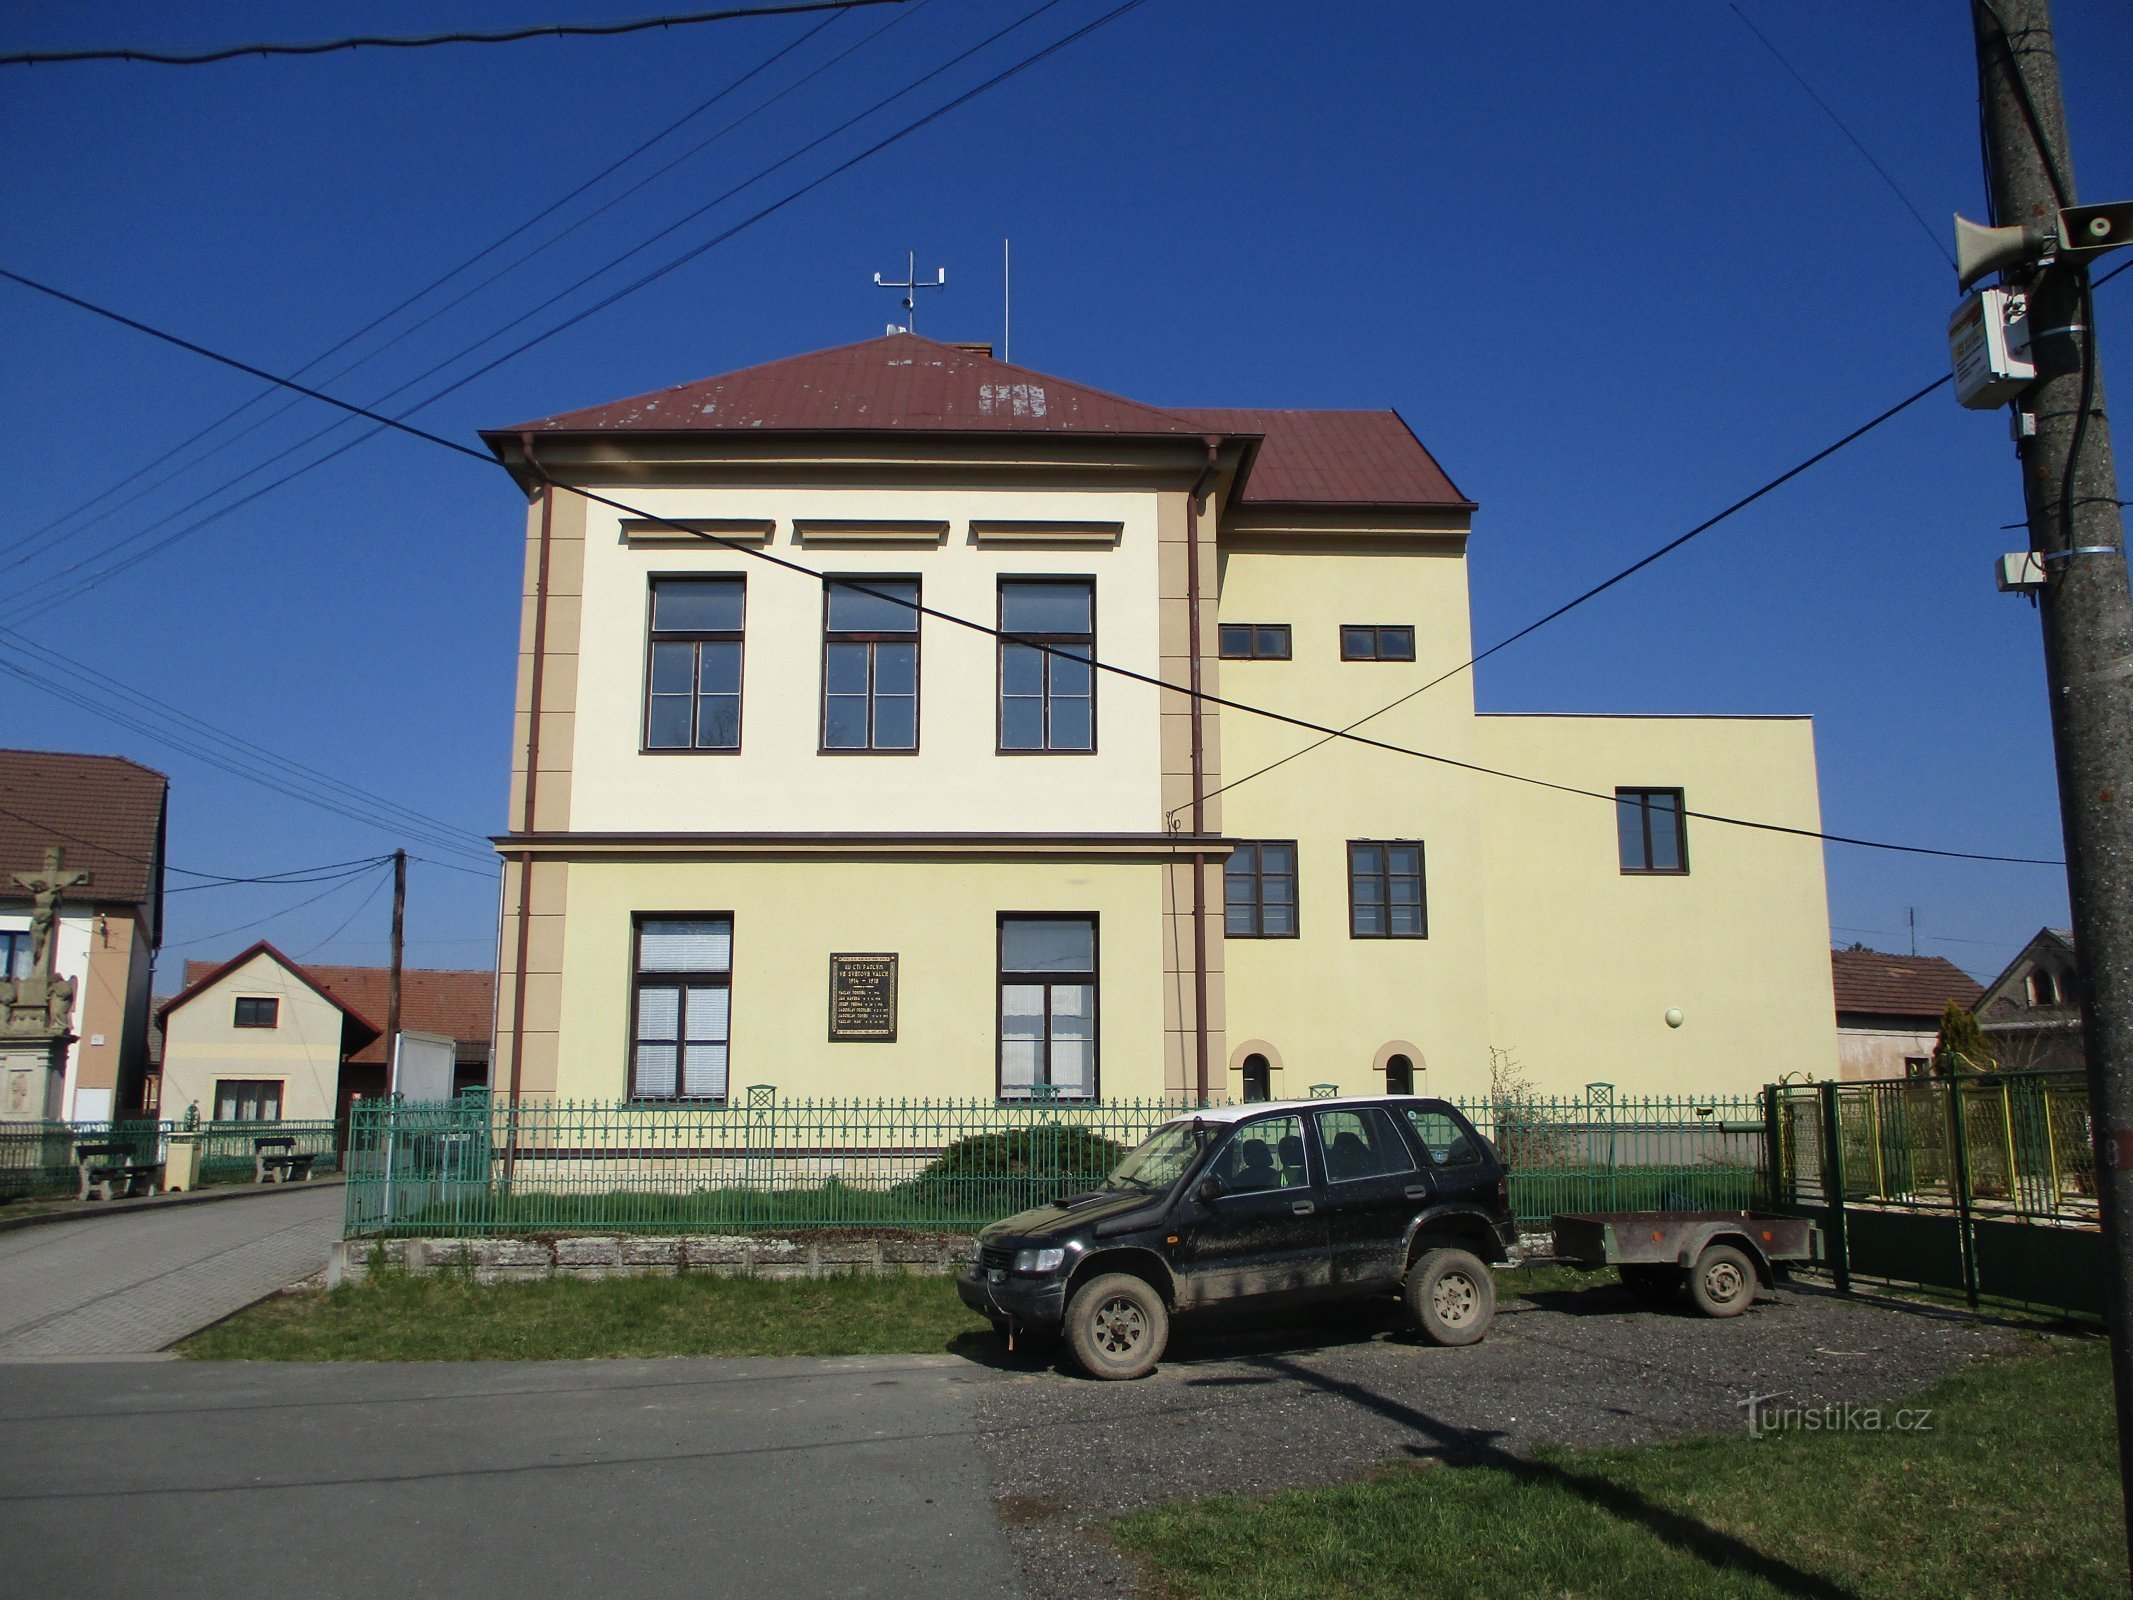 School with extension (Račice nad Trotinou, 2.4.2020 April XNUMX)